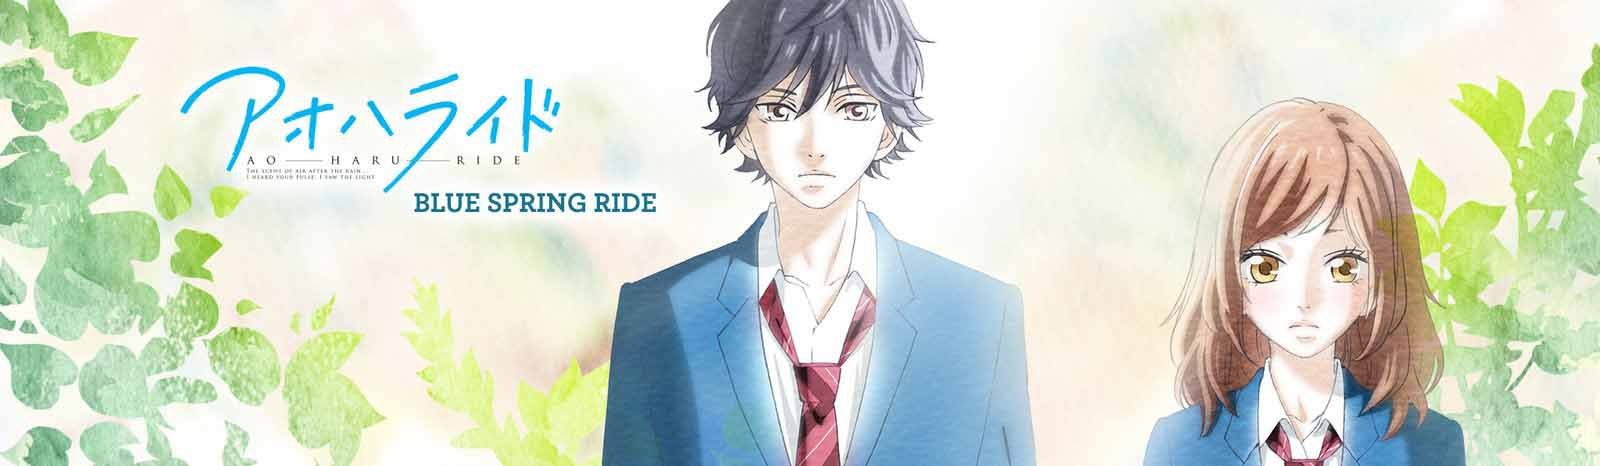 Ao Haru Ride Anime